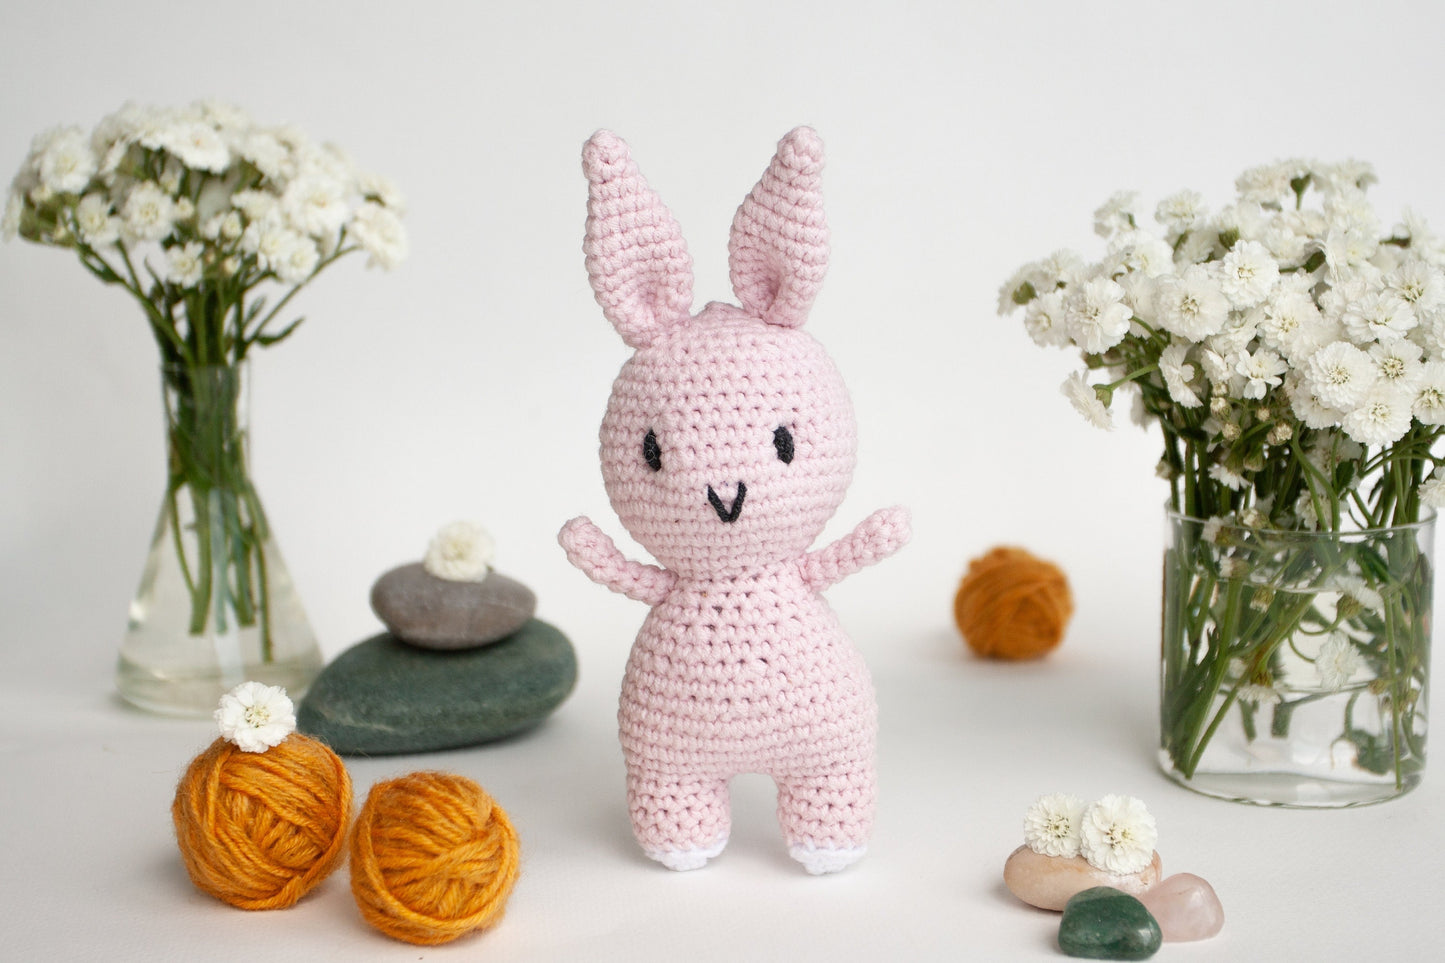 Crochet Kit for Adults Bunny, Beginner Crochet Kit, Animal Amigurumi DIY Craft Kit